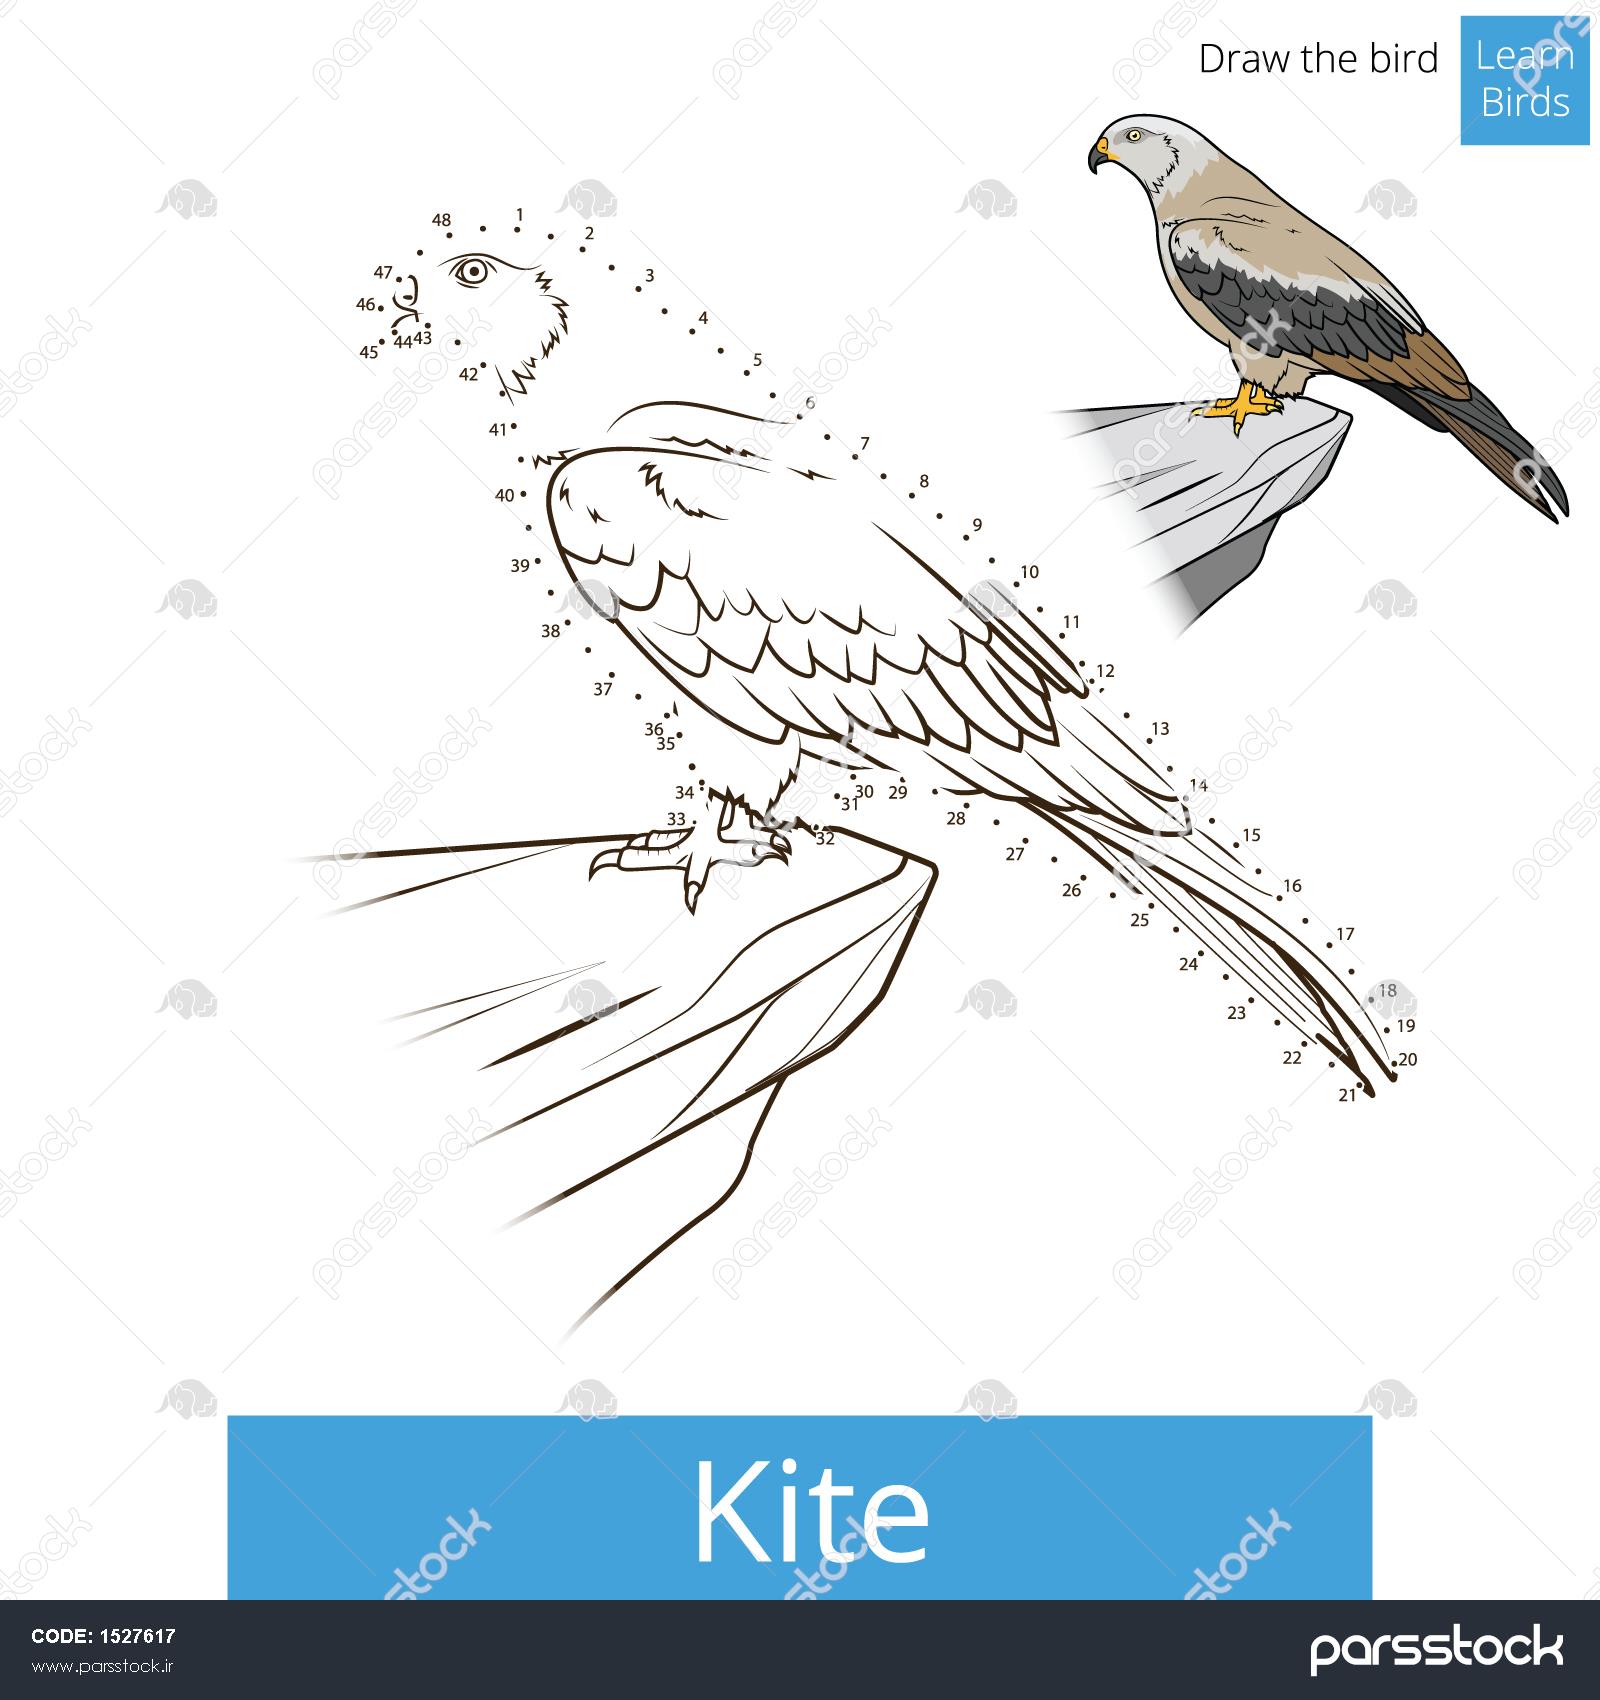 picture of kite bird